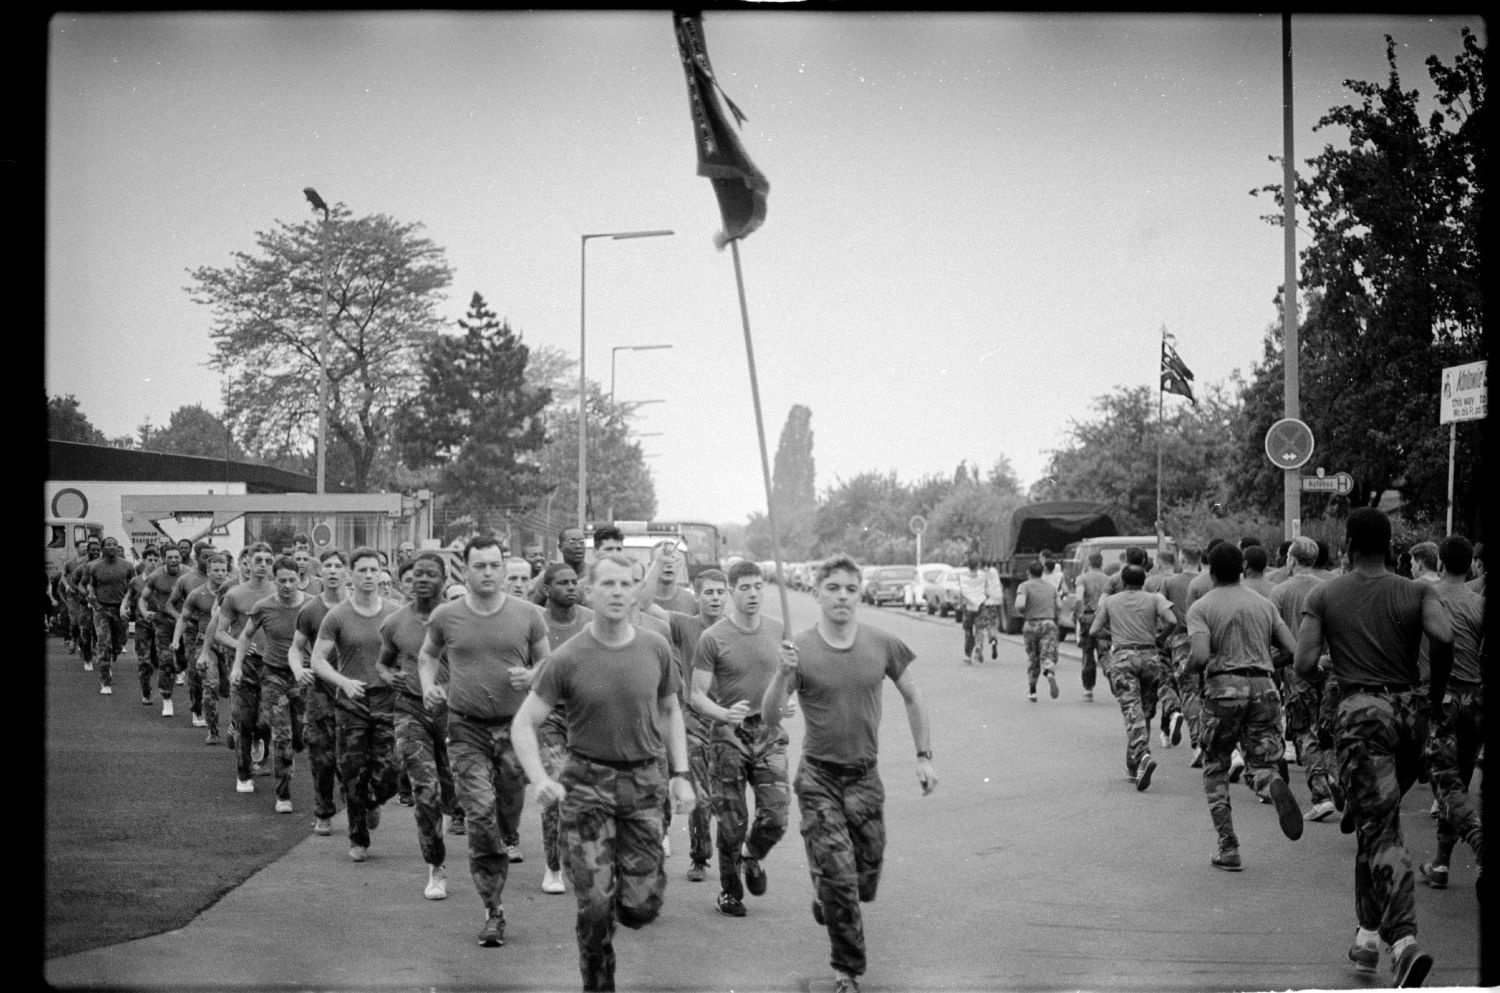 s/w-Fotografie: Brigade Run der U.S. Army Berlin Brigade in den McNair Barracks in Berlin-Lichterfelde (AlliiertenMuseum/U.S. Army Photograph Public Domain Mark)